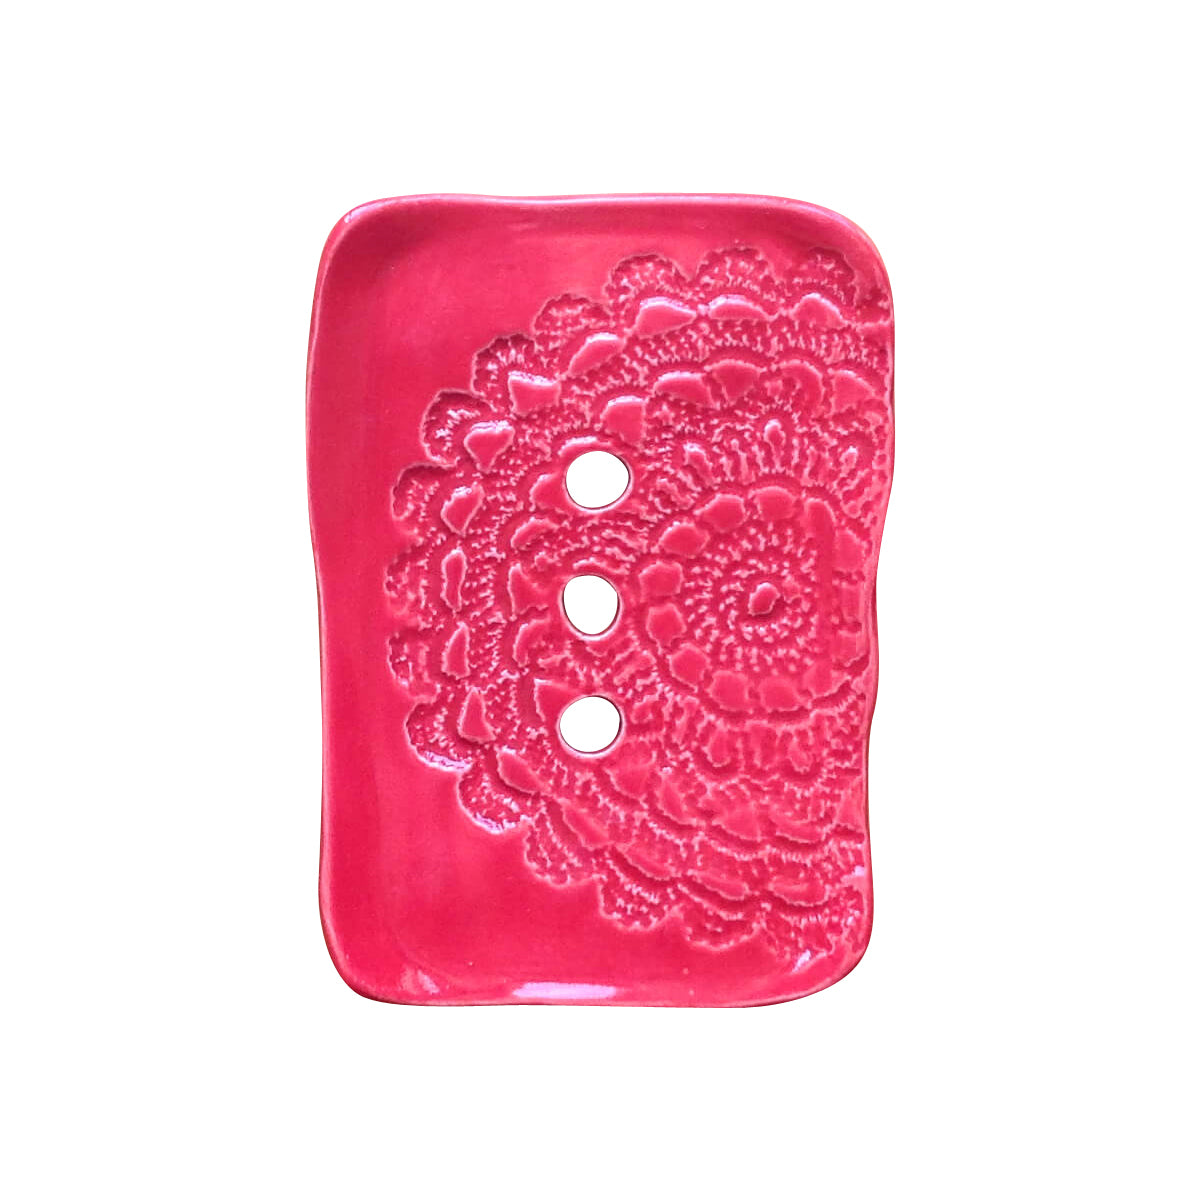 Red ceramic soap dish